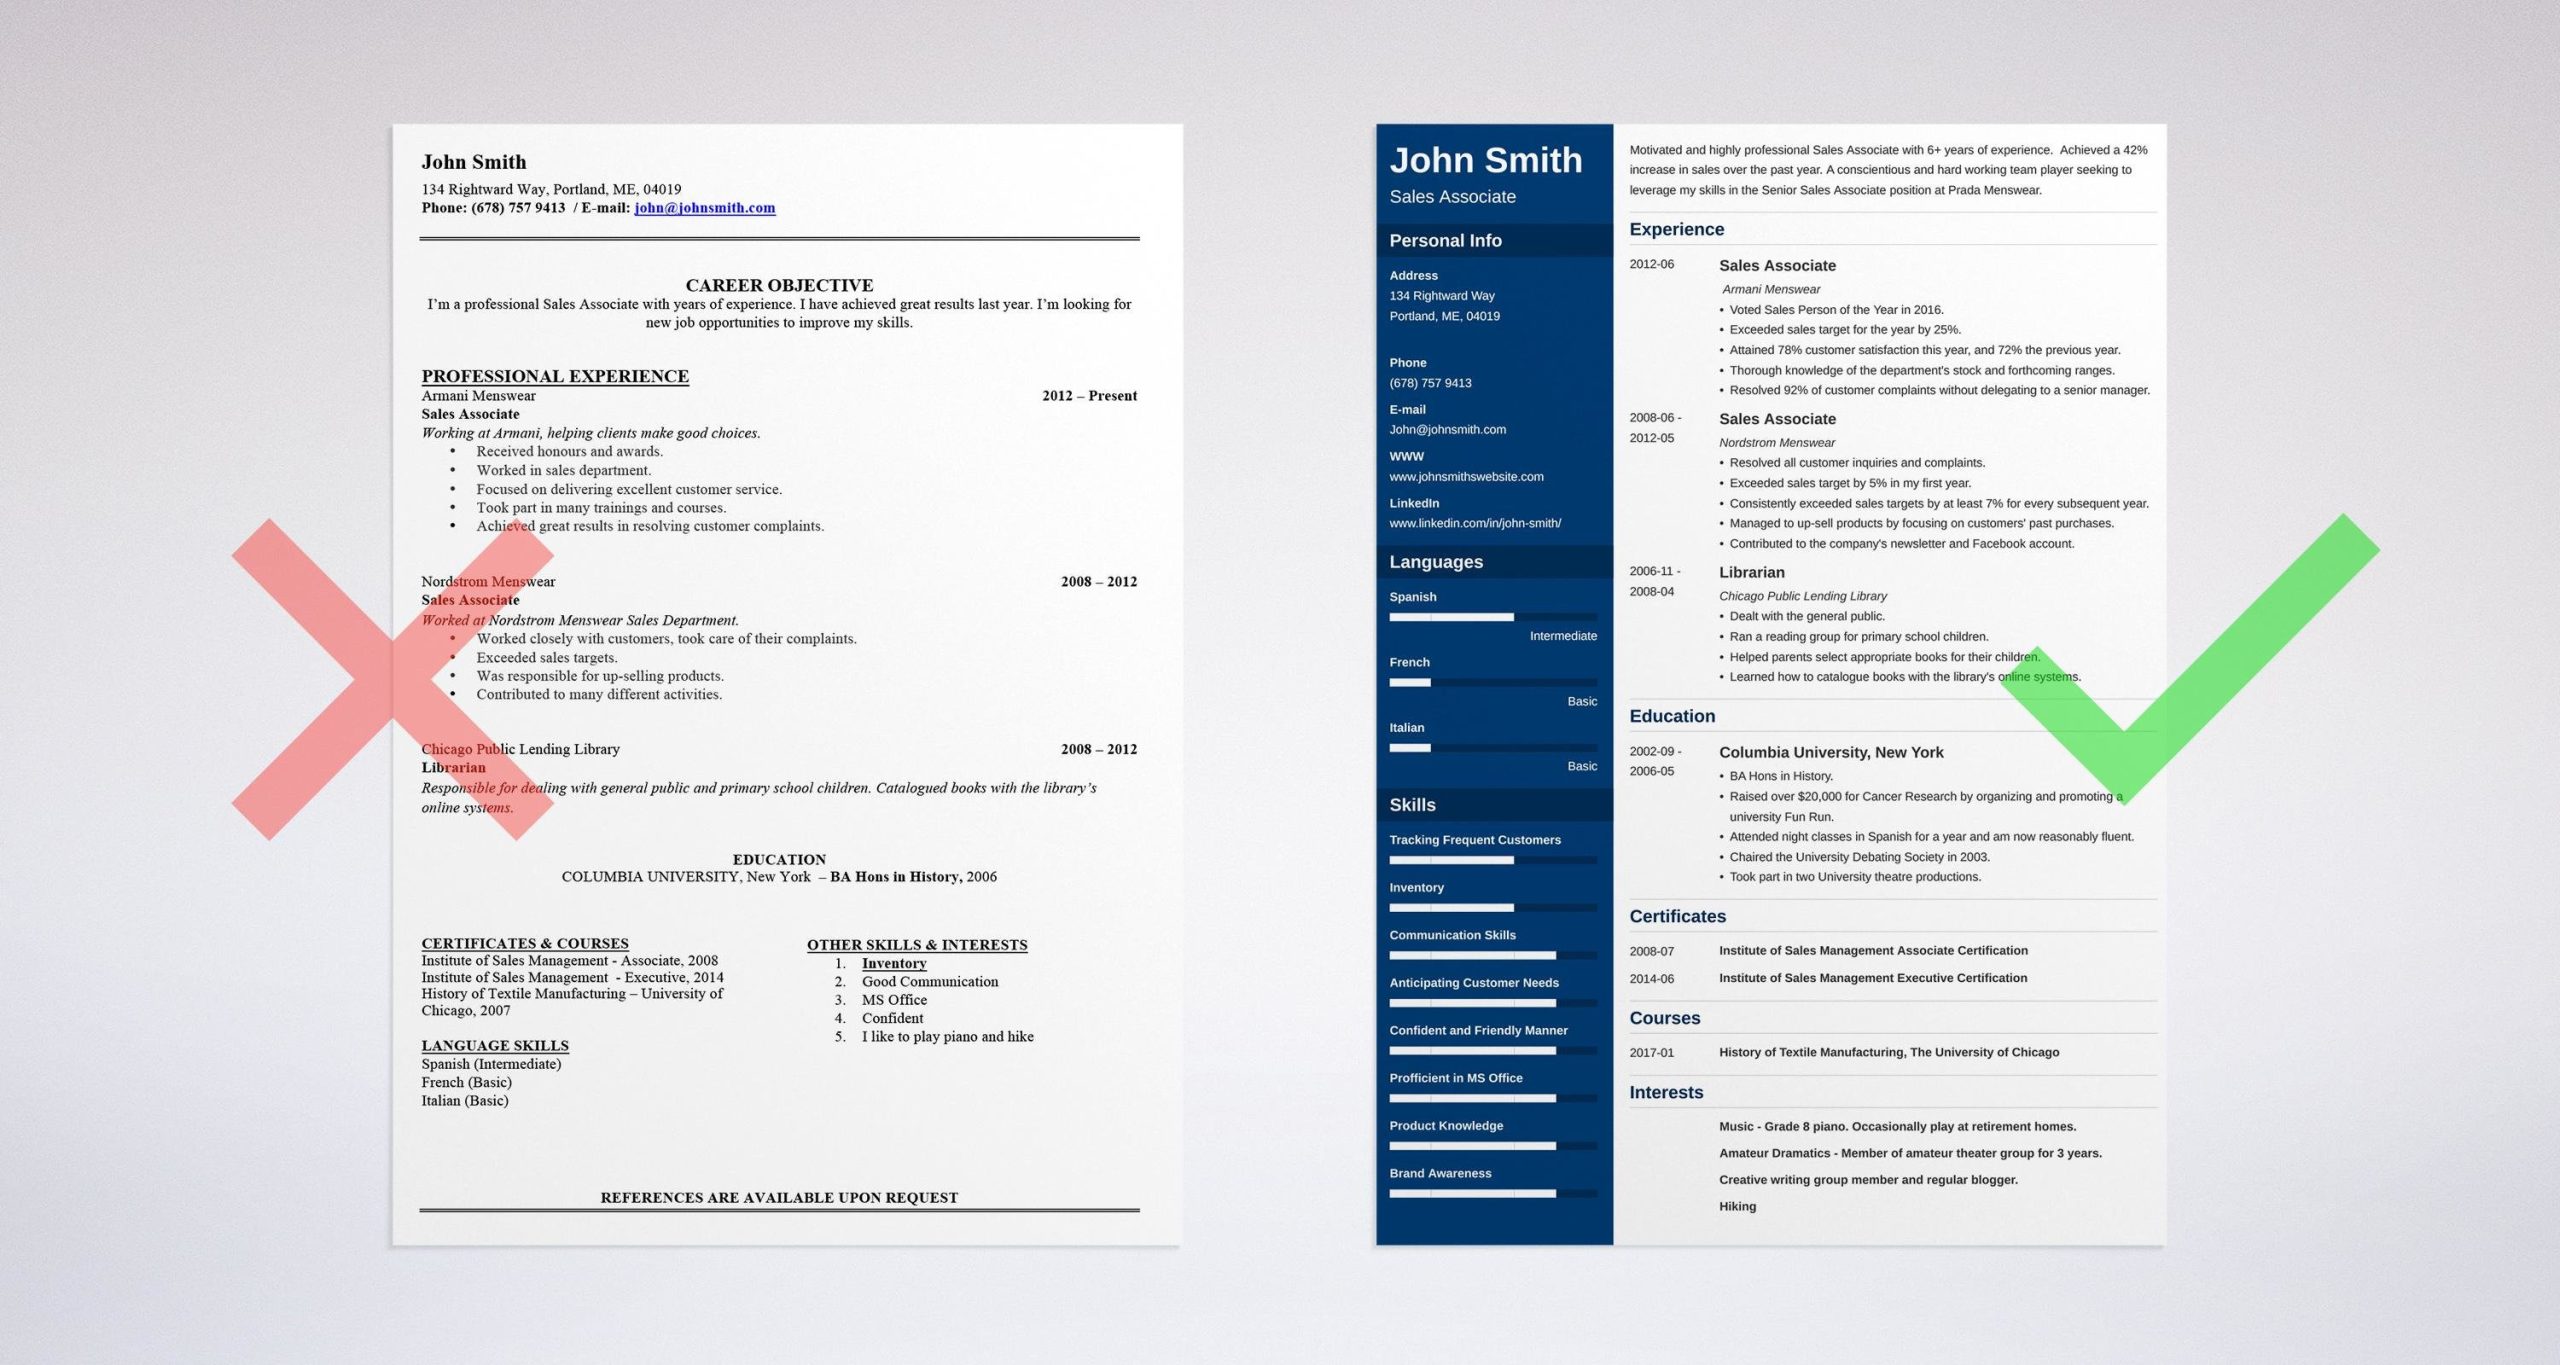 Credit Card Sales Executive Resume Samples Sales associate Resume [example   Job Description]